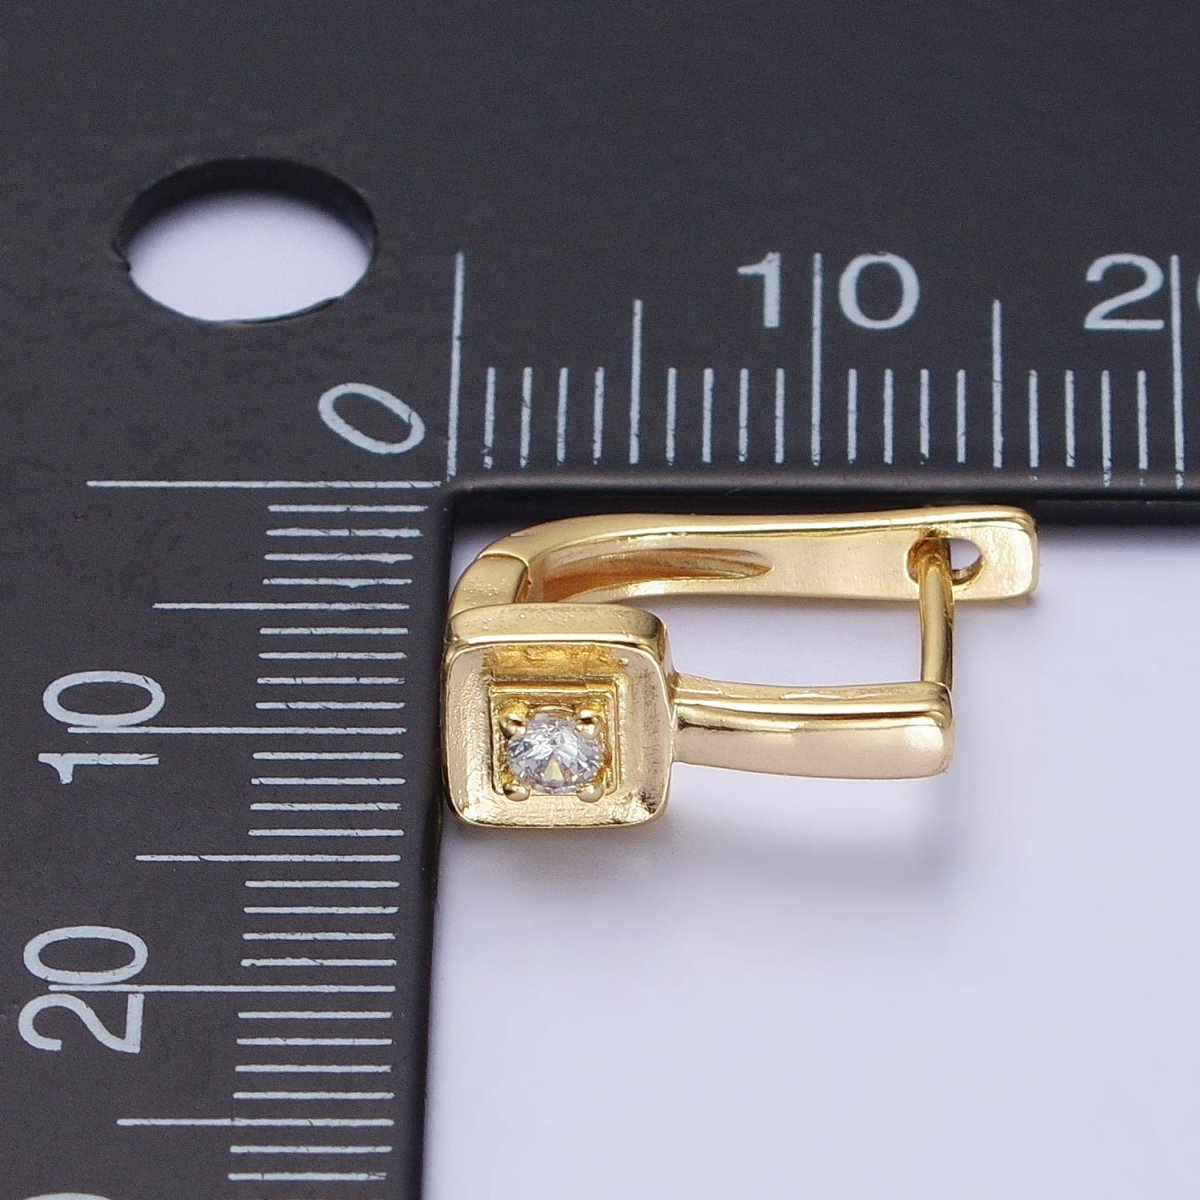 Gold, Silver 16mm U-Shaped Oblong Square CZ Geometric English Lock Earrings | AB778 AB1550 - DLUXCA